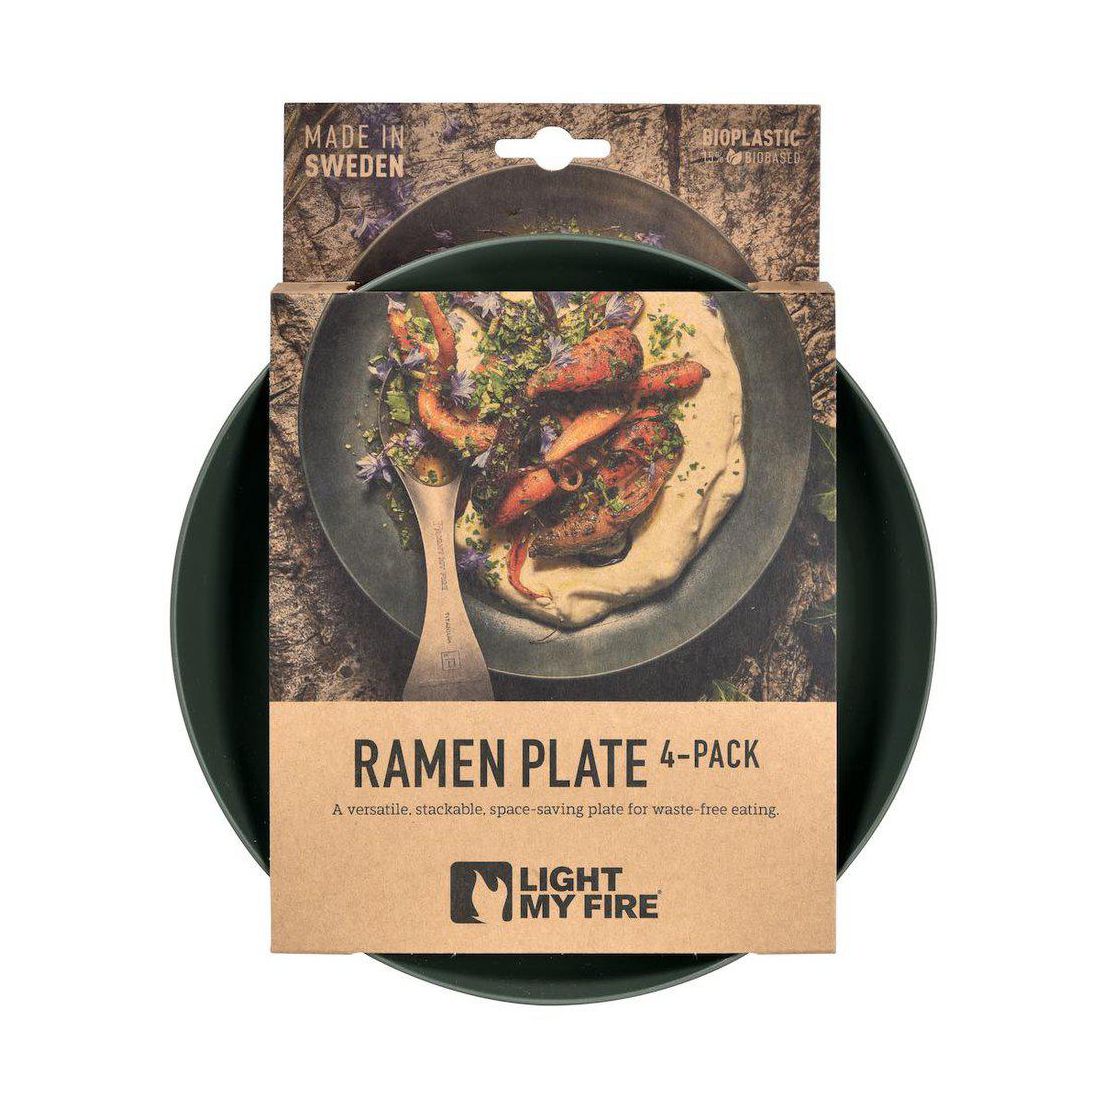 RamenPlate 4-pack